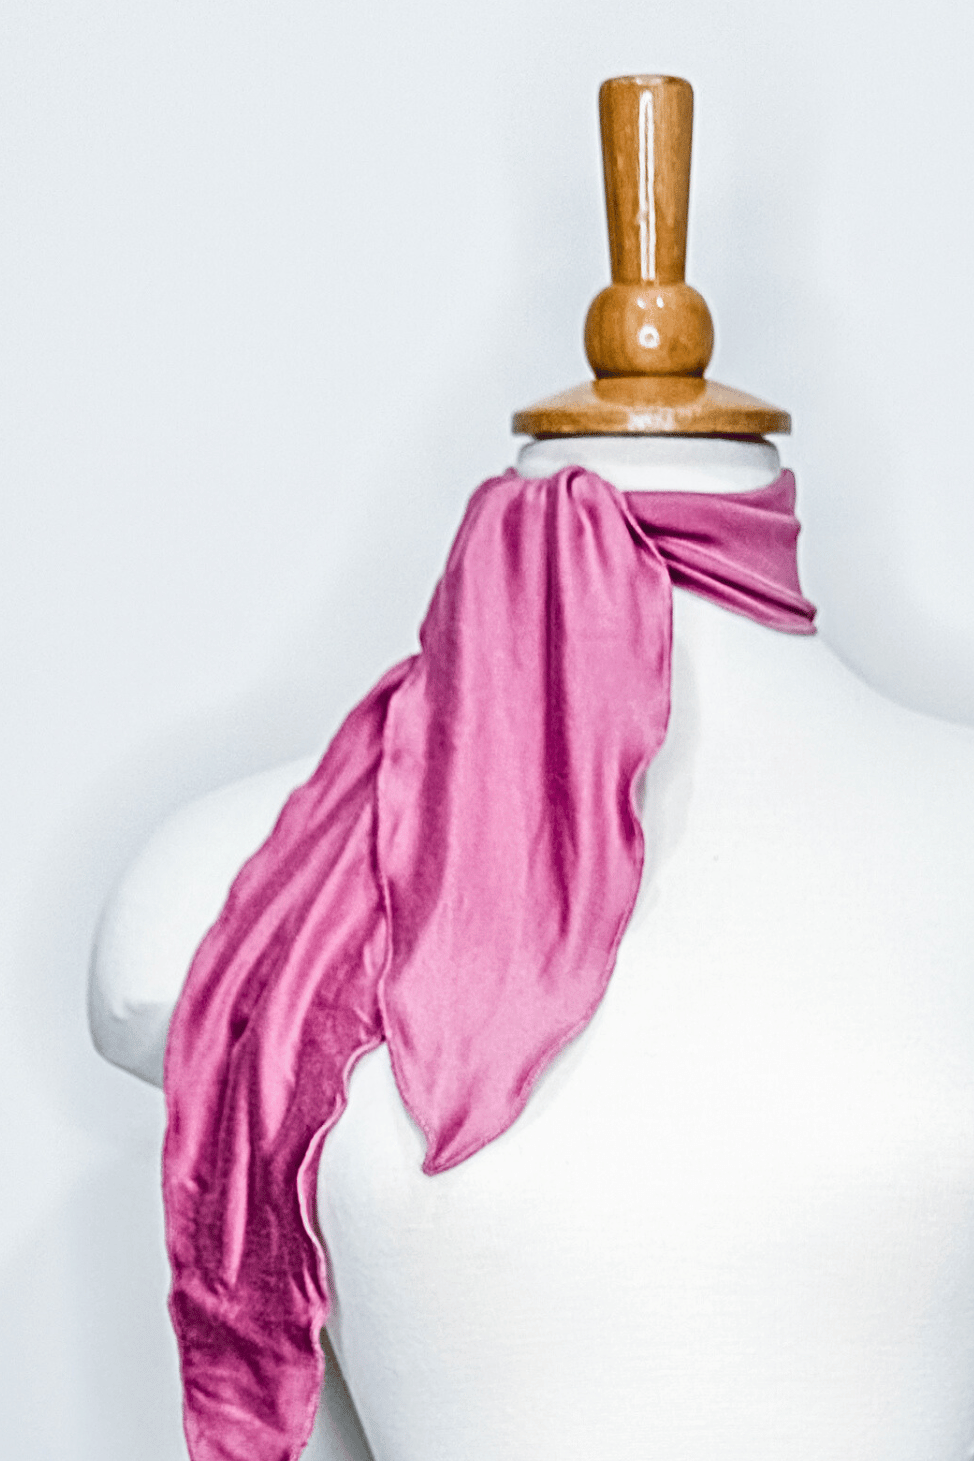 Multiway Tie in Rose color from Diane Kroe